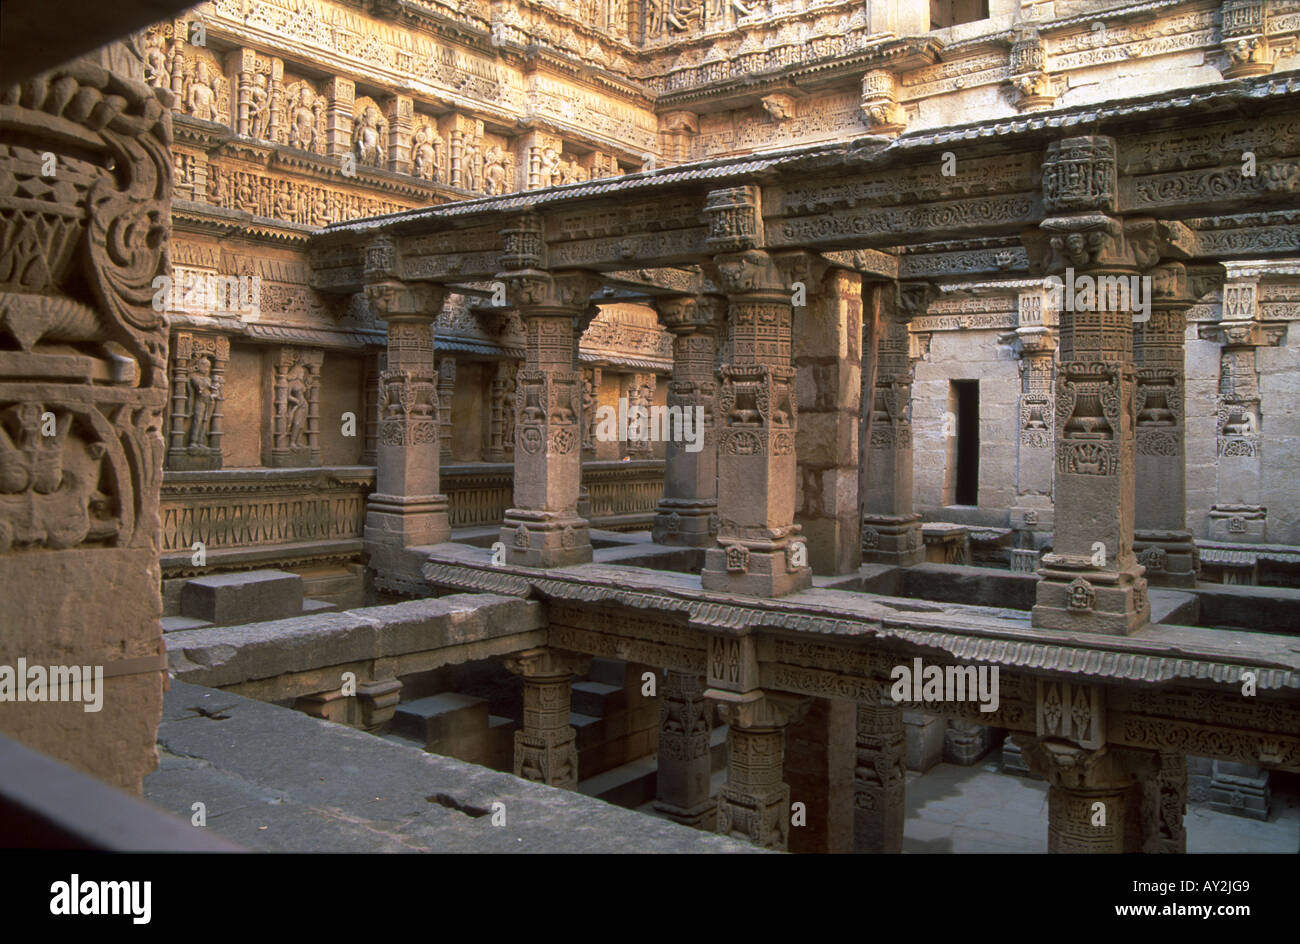 Patan step well called the Rani ki vav, Gujarat, India. Built about 1050 A.D. Stock Photo